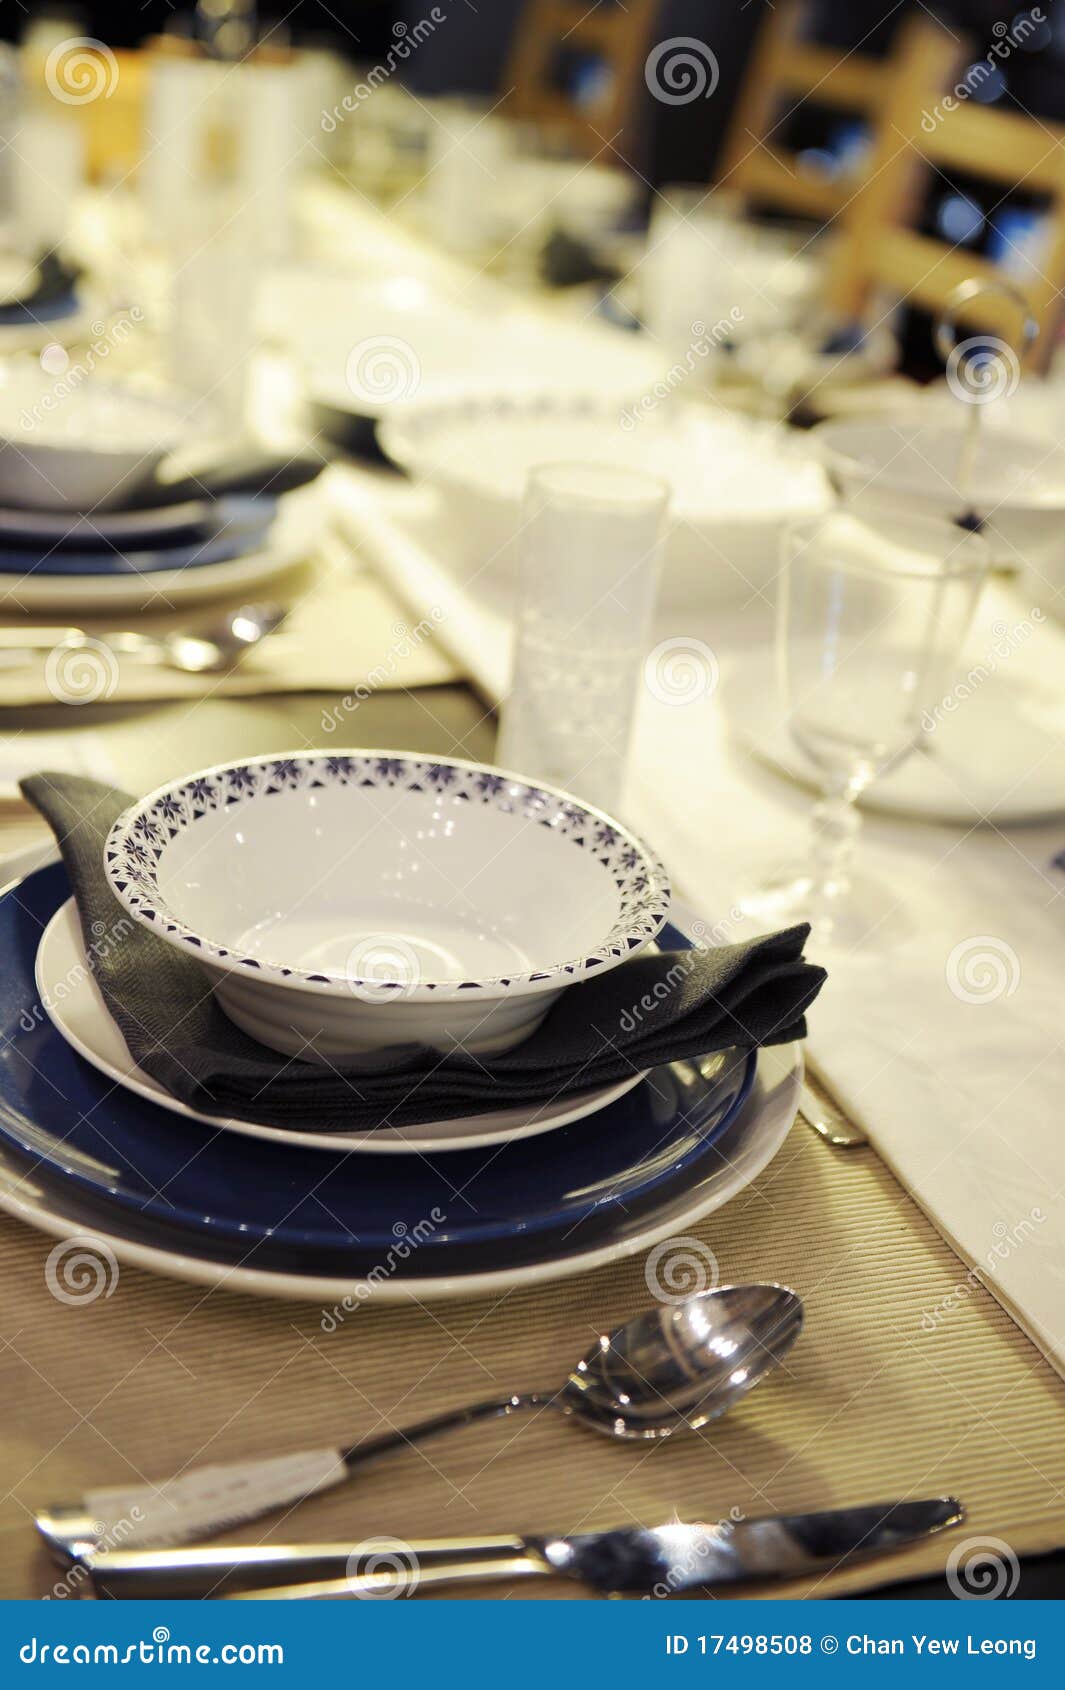 Dining set stock photo. Image of utensils, interior, closeups - 17498508